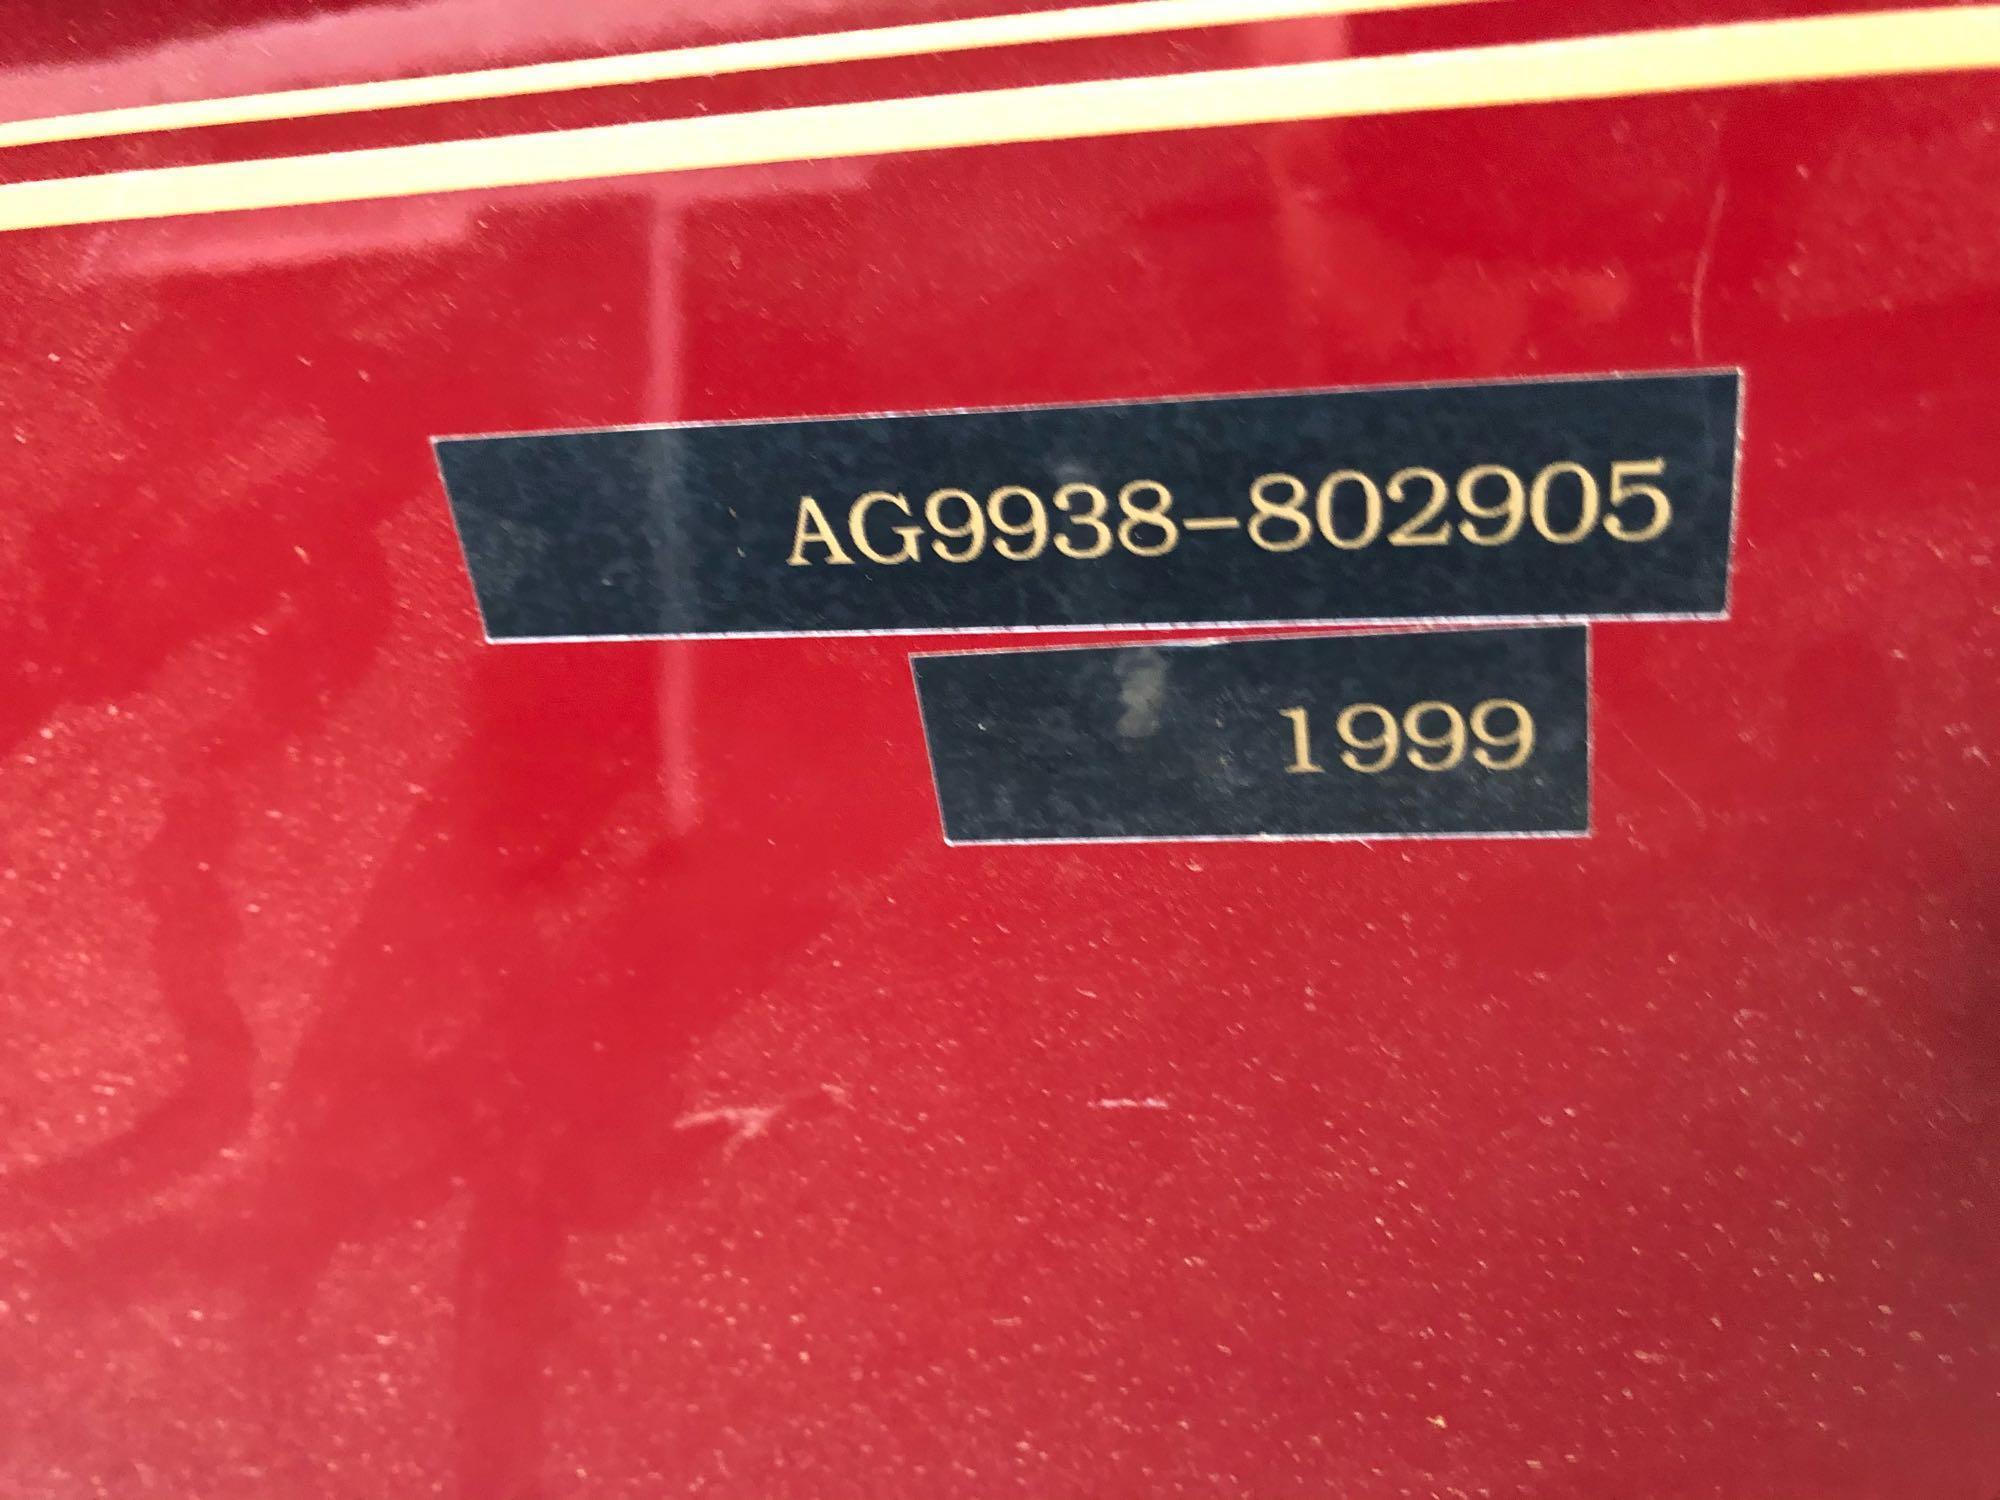 1999 Golf Car IR, ''Golf Cart'', 4 seat, gas engine, maroon color, VIN AG9938-802905, runs good!